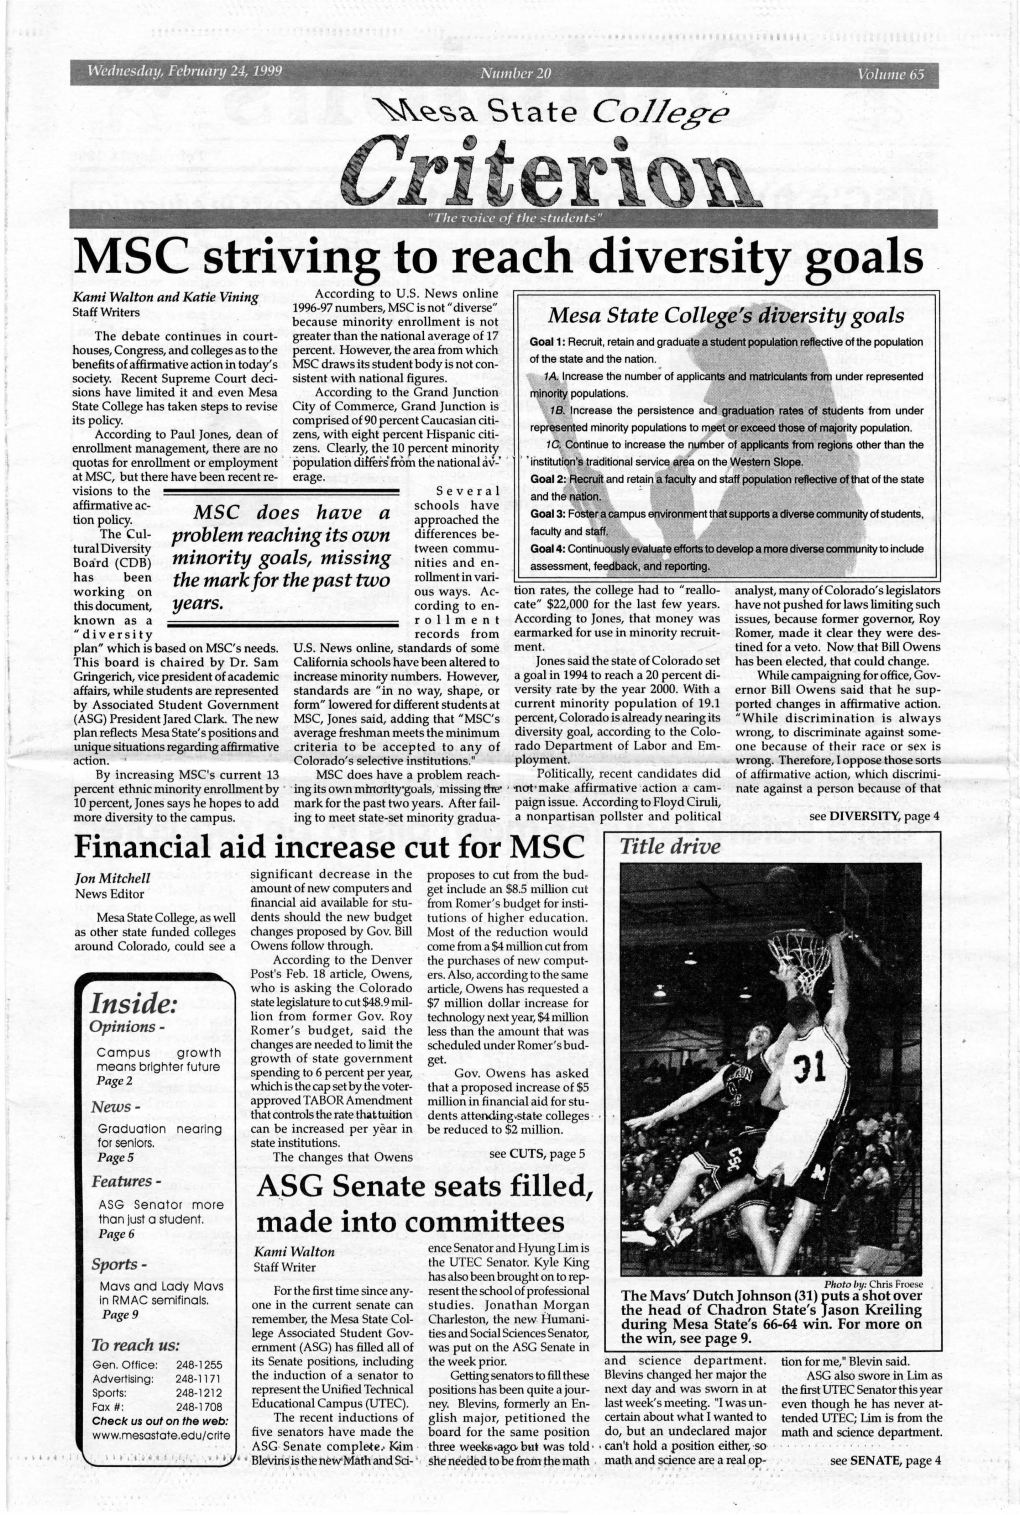 MSC Striving to Reach Diversity Goals Kami Walton and Katie Vining According to U.S